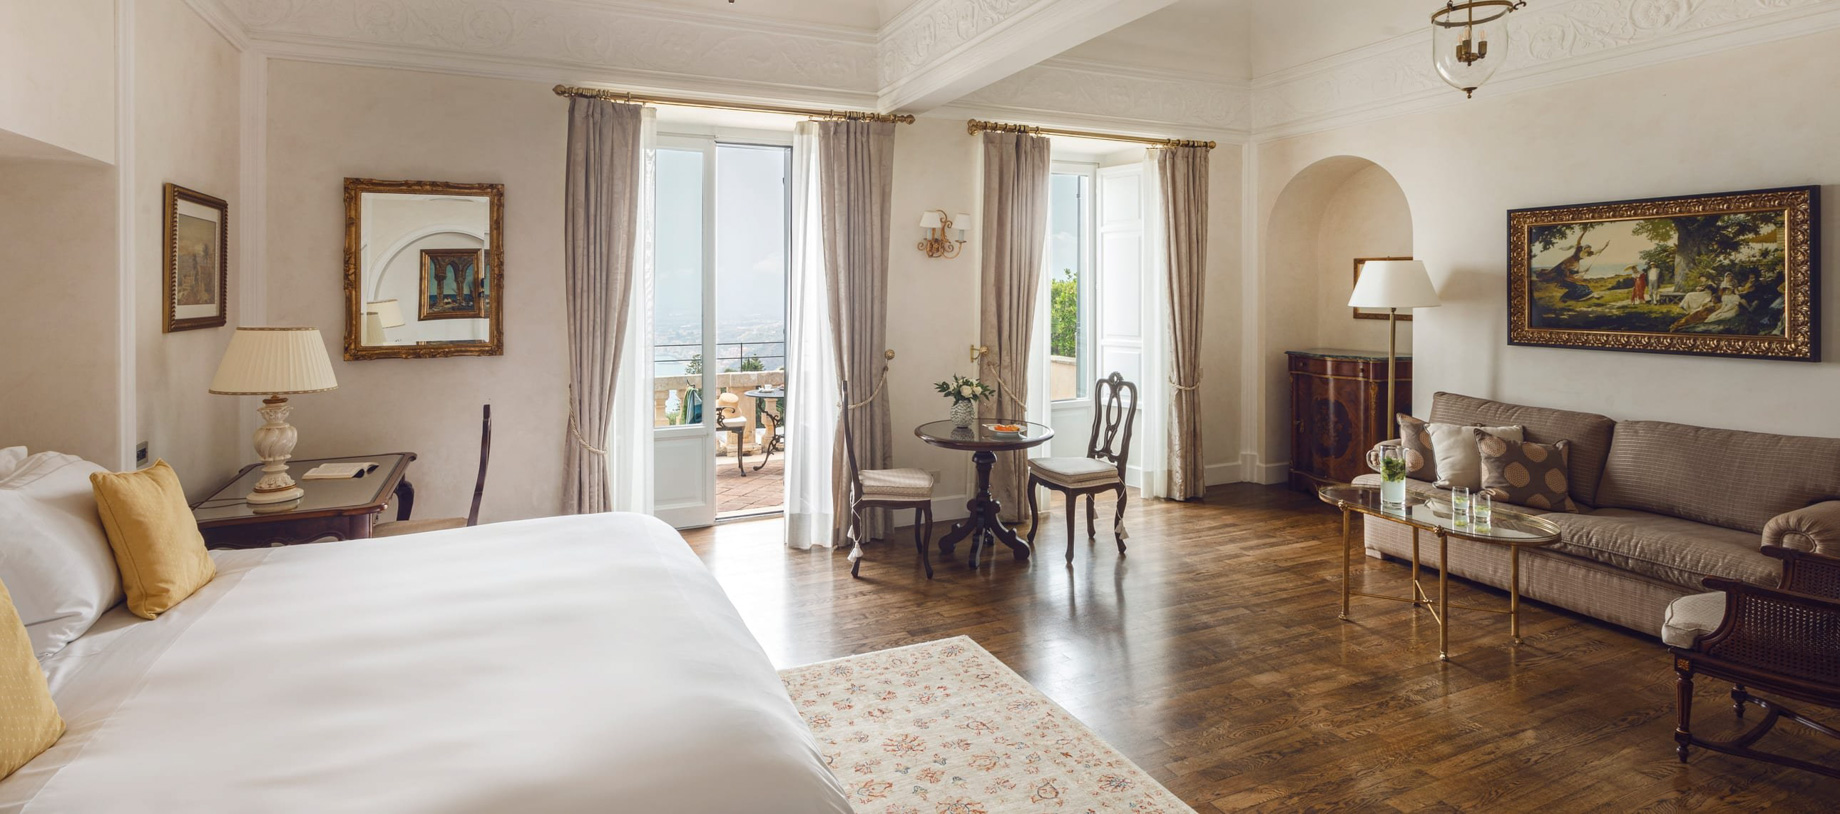 130 – Grand Hotel Timeo, A Belmond Hotel – Taormina, Italy – Junior Suite